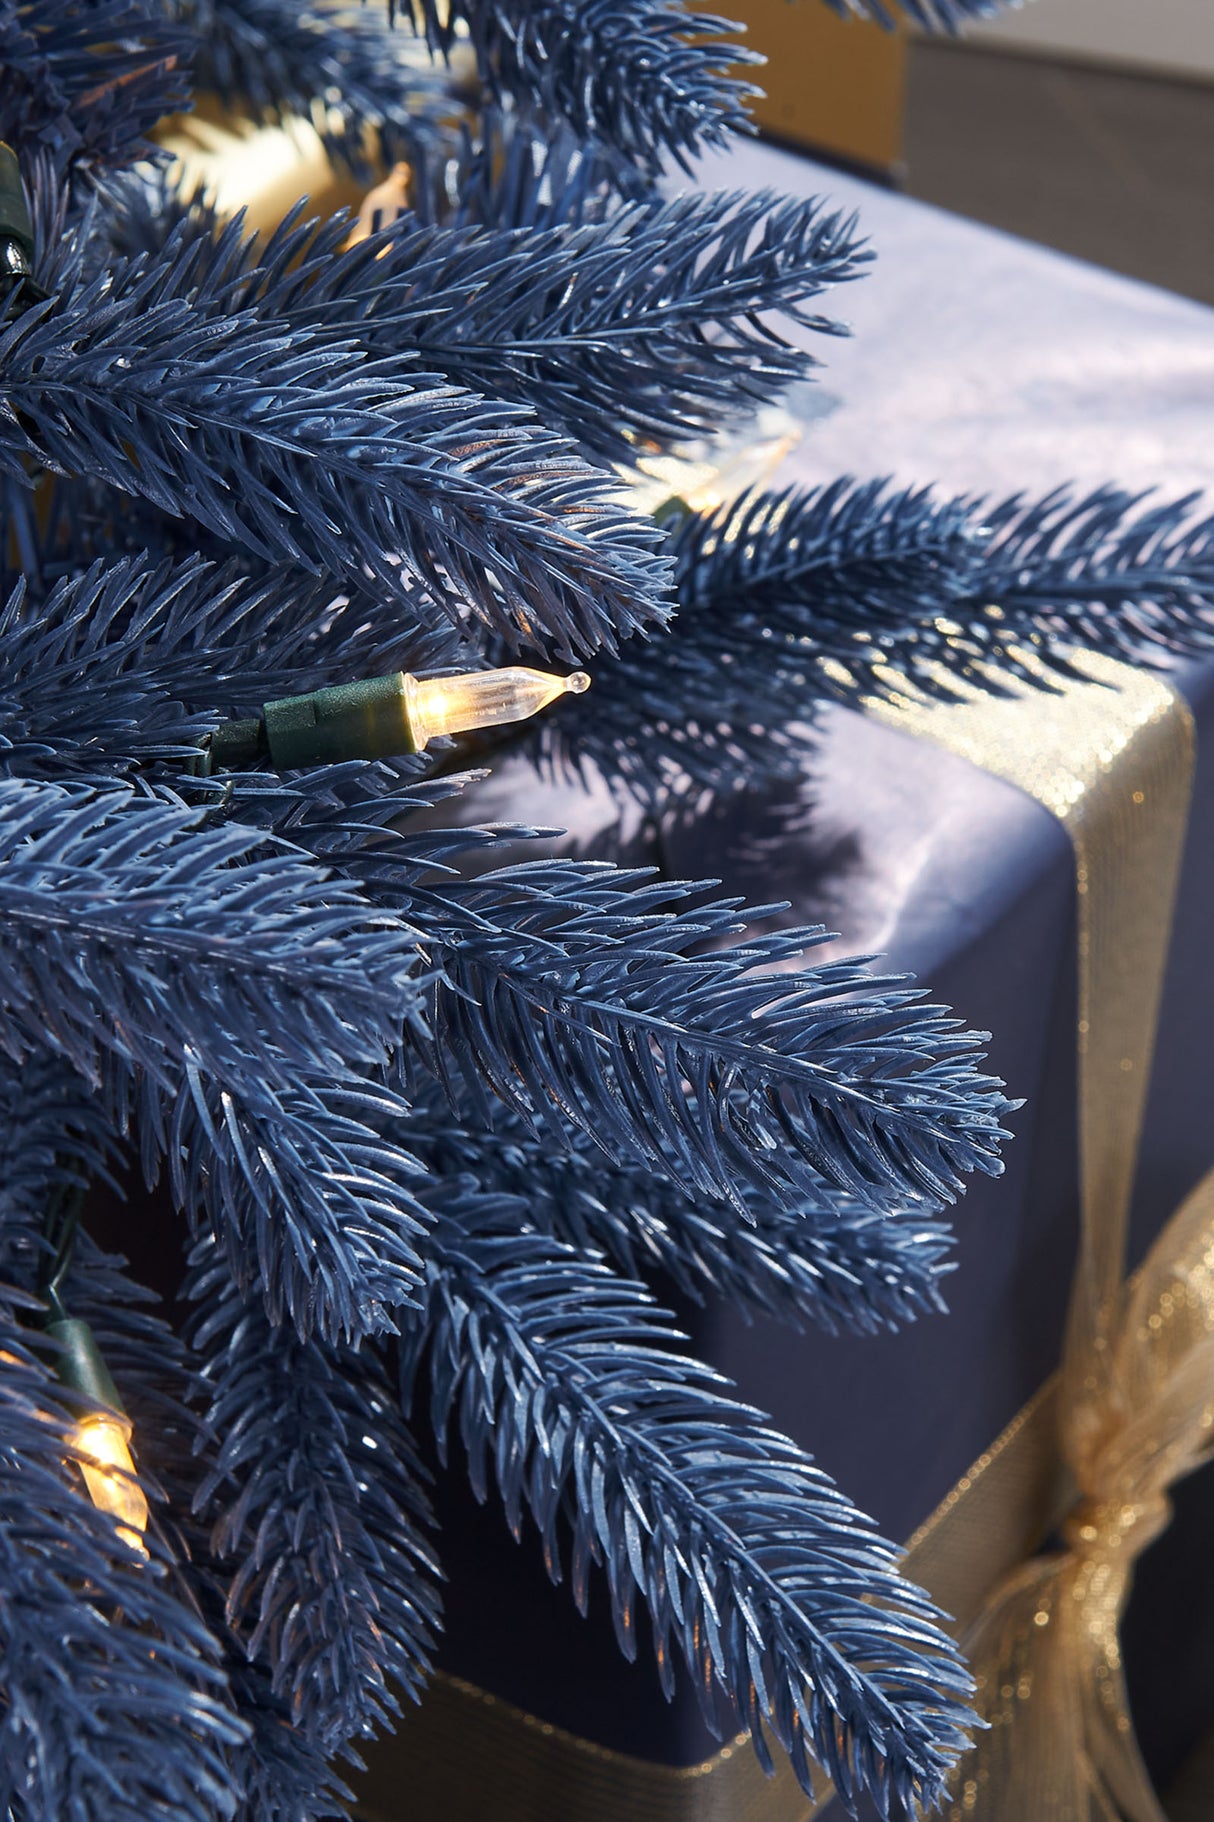 Pre-Lit Sapphire Blue Christmas Tree